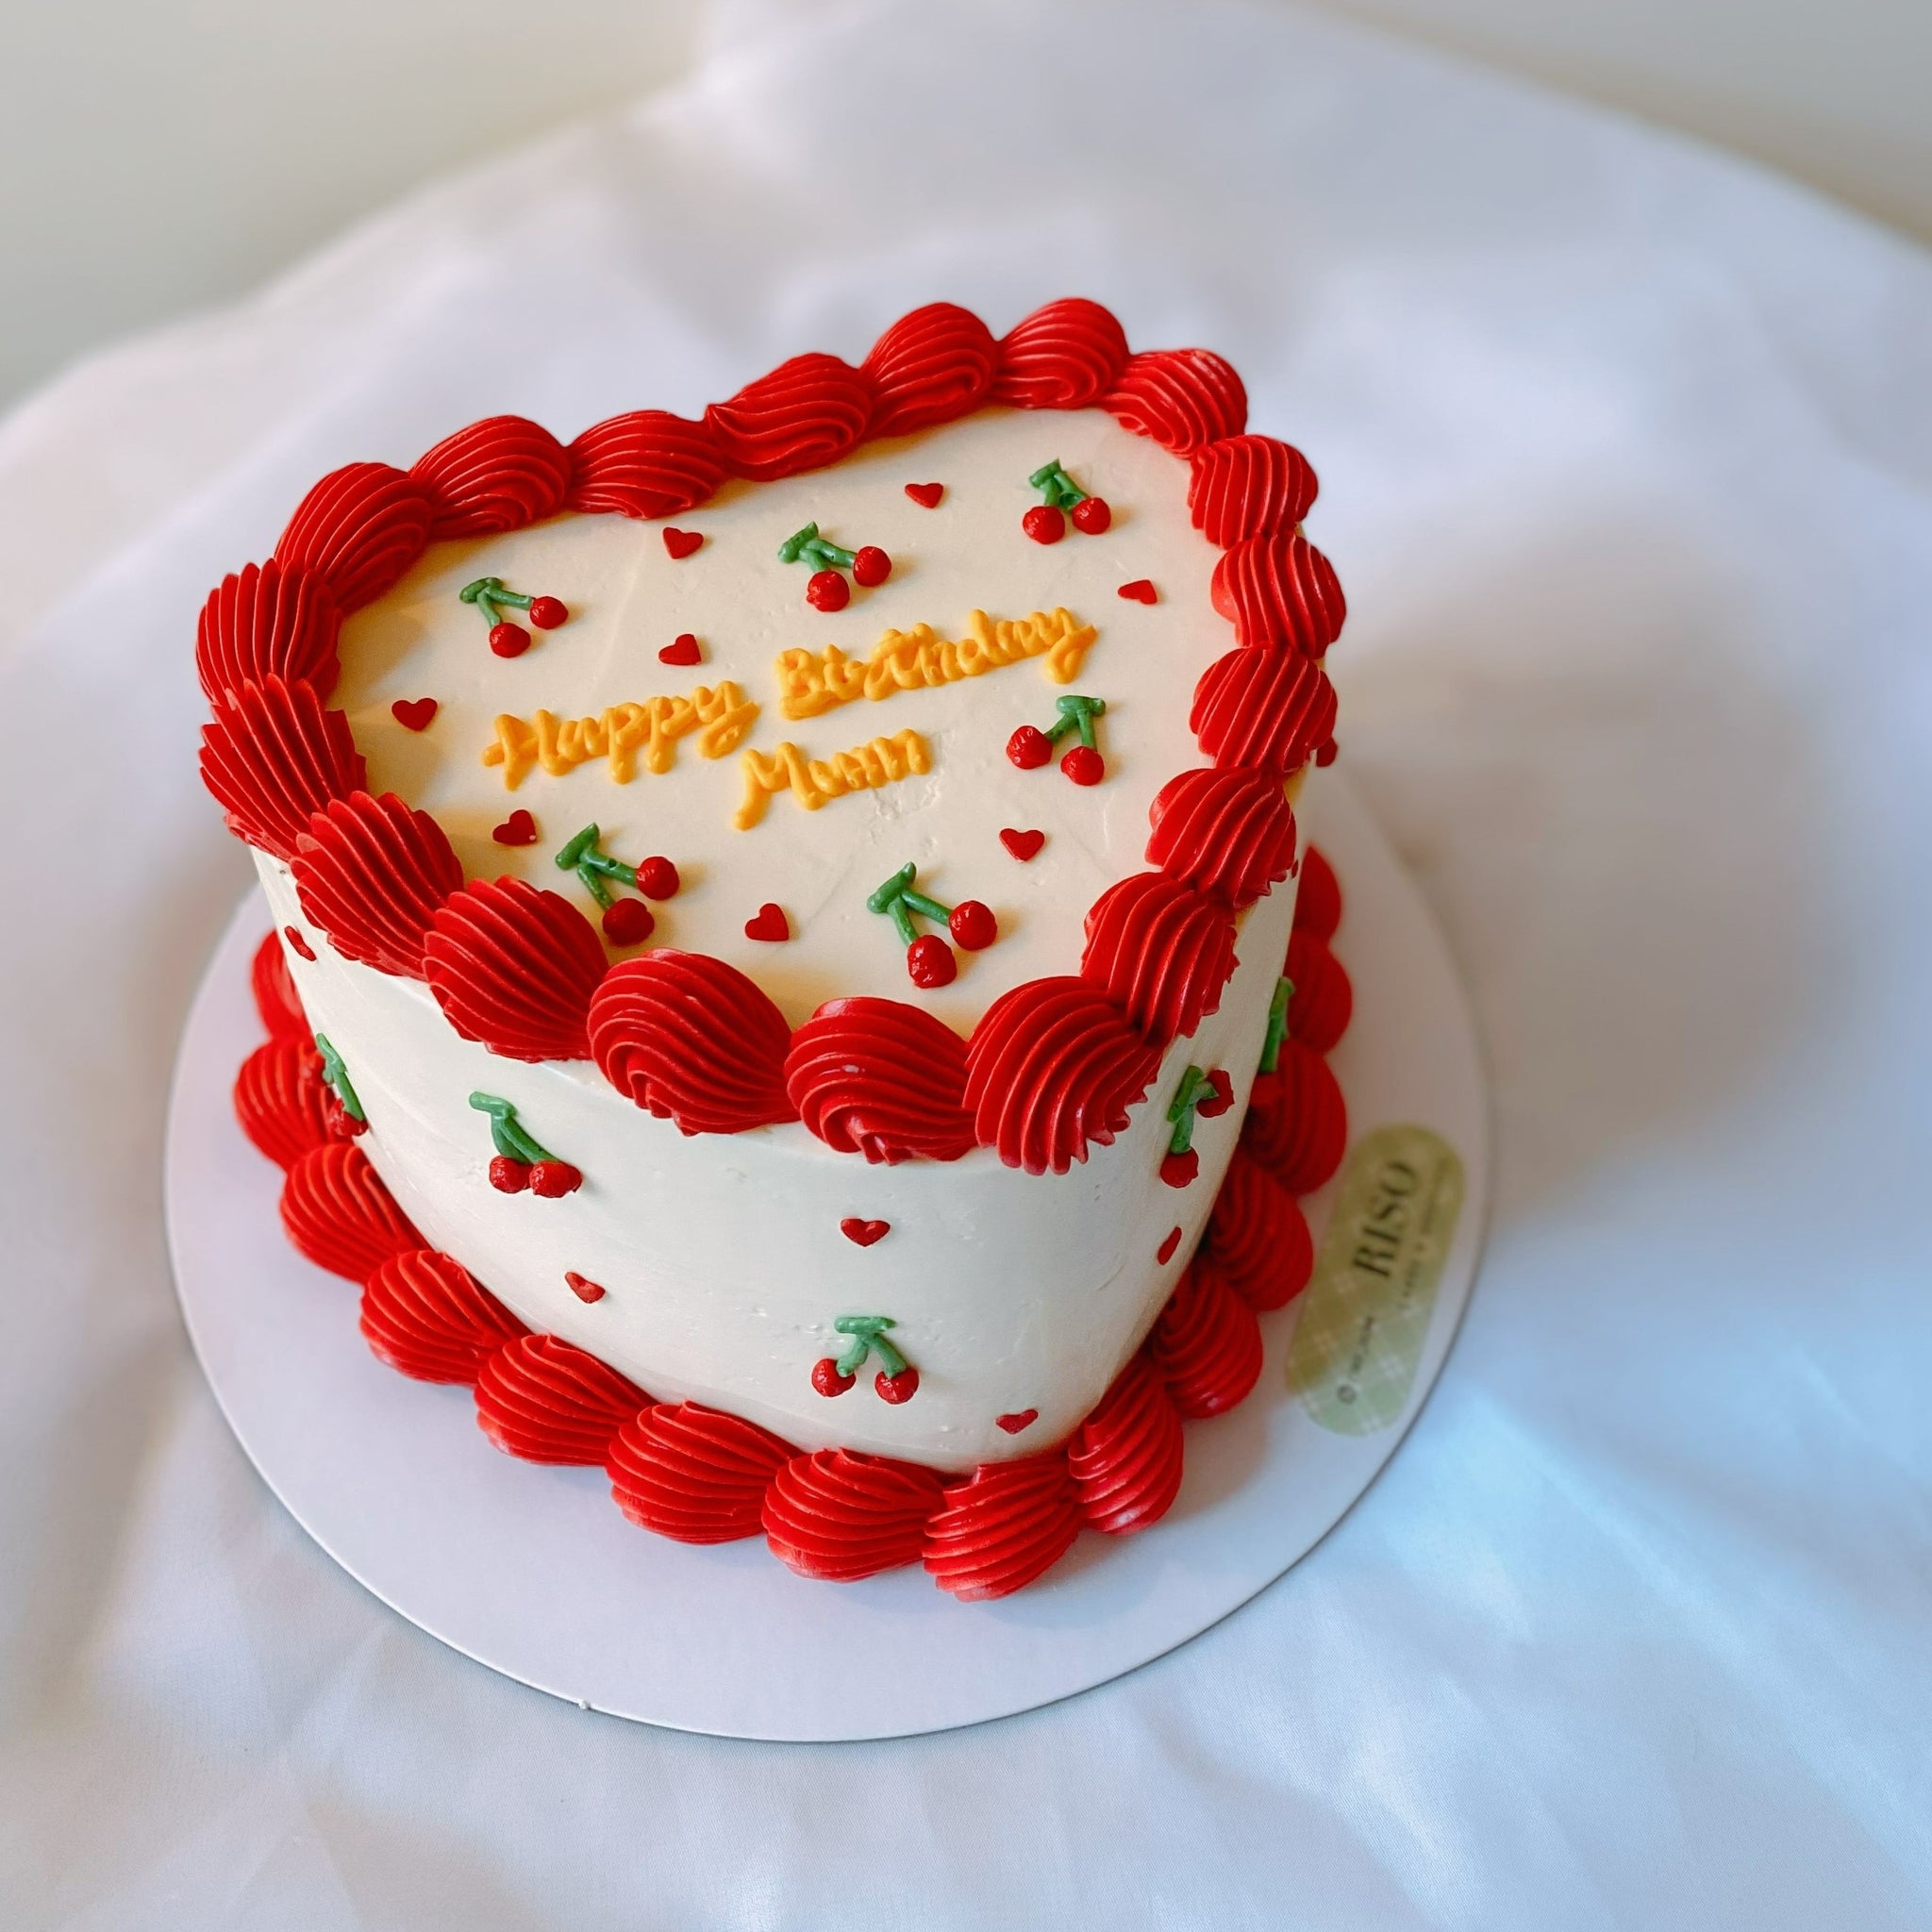 Toy Story Cakes - Decorated Cake by Sugar Sweet Cakes - CakesDecor